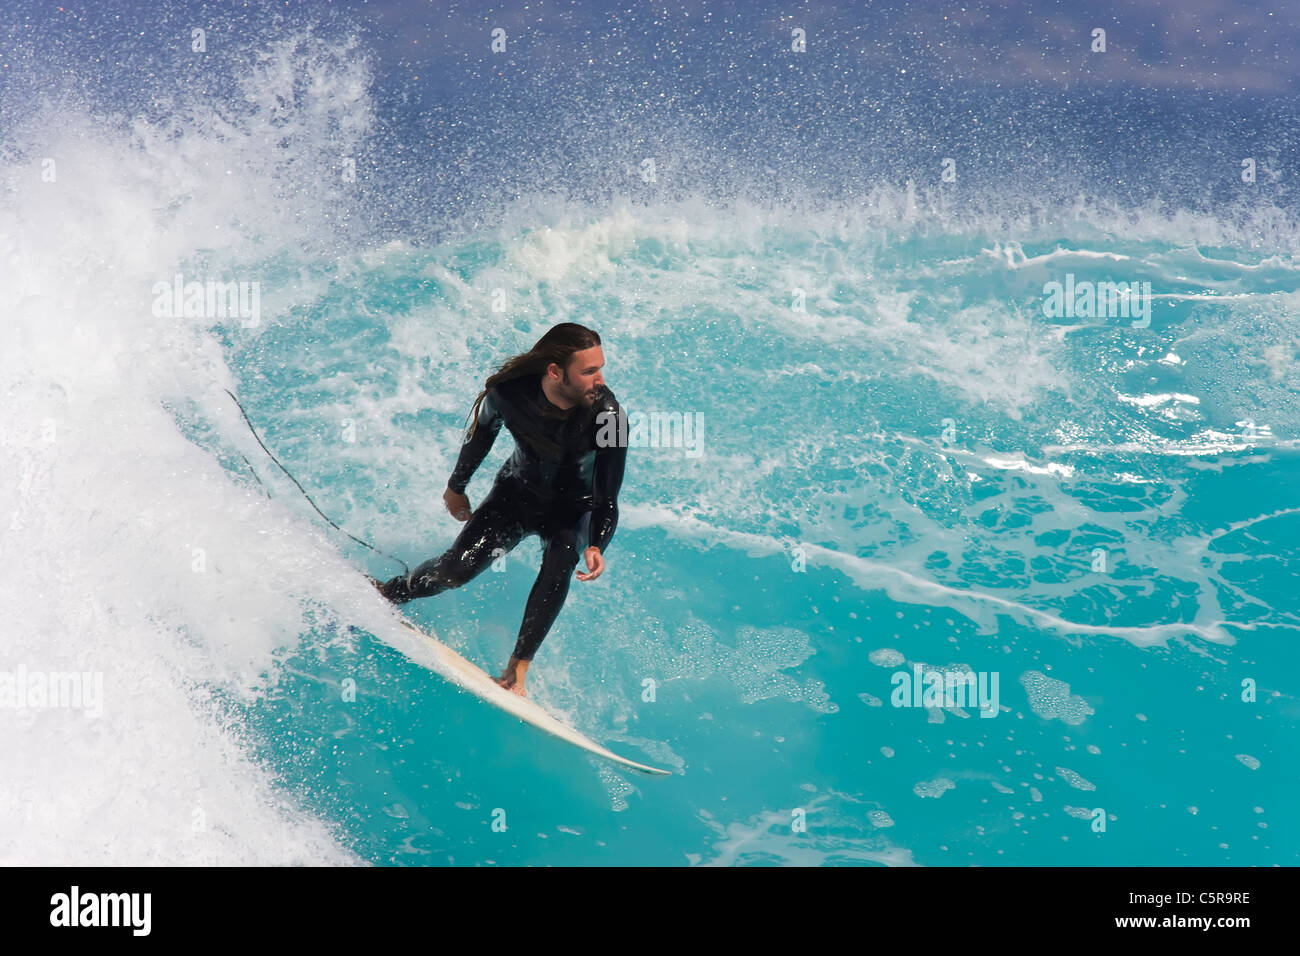 A surfer rides a stunning azure blue ocean wave. Stock Photo